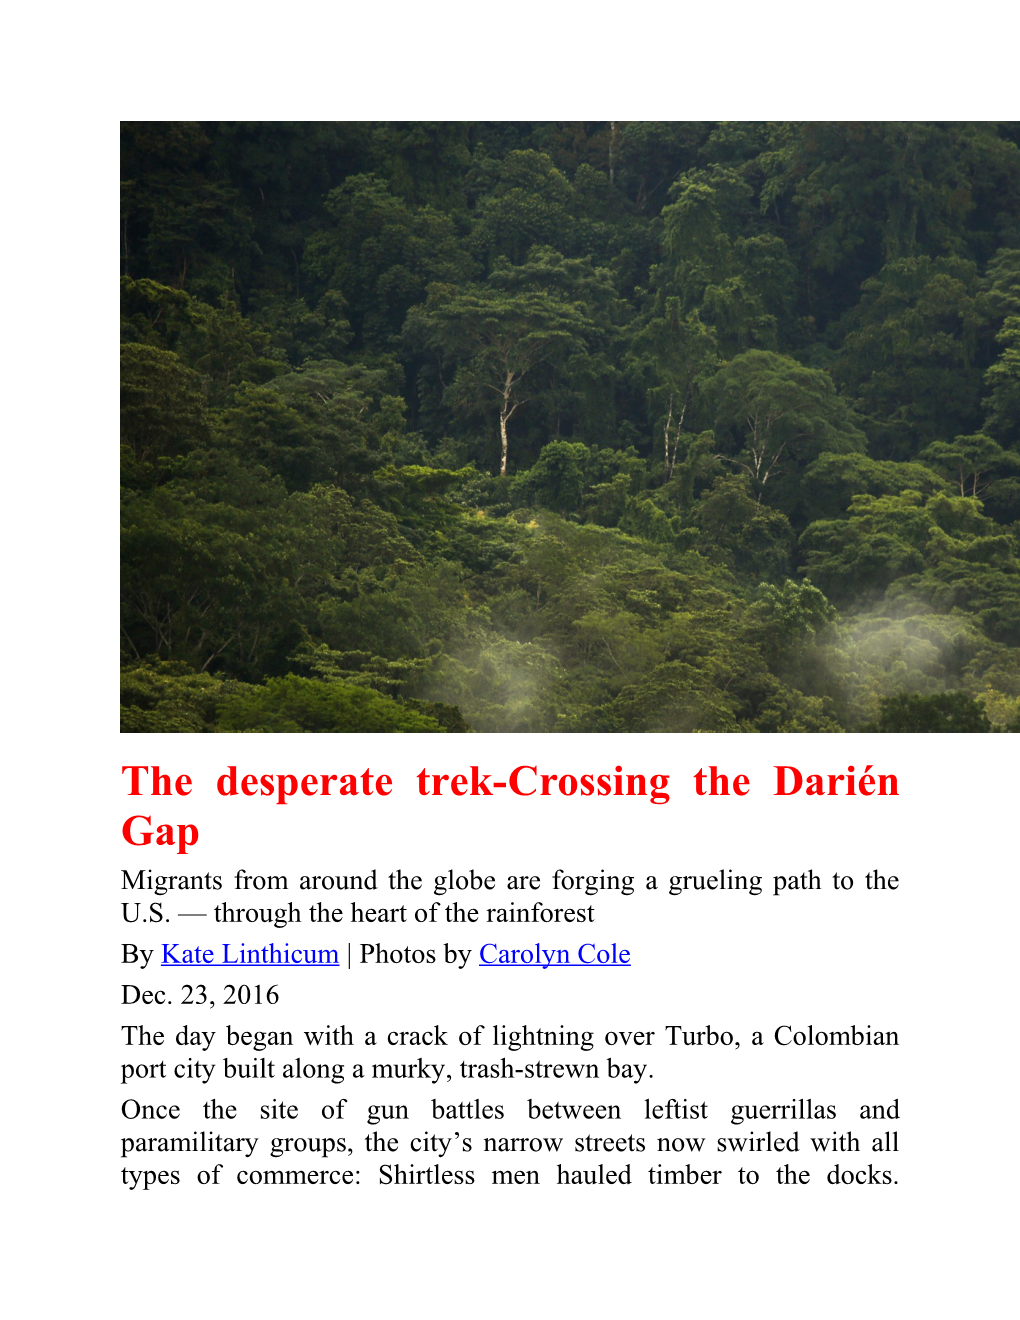 The Desperate Trek-Crossing the Darién Gap